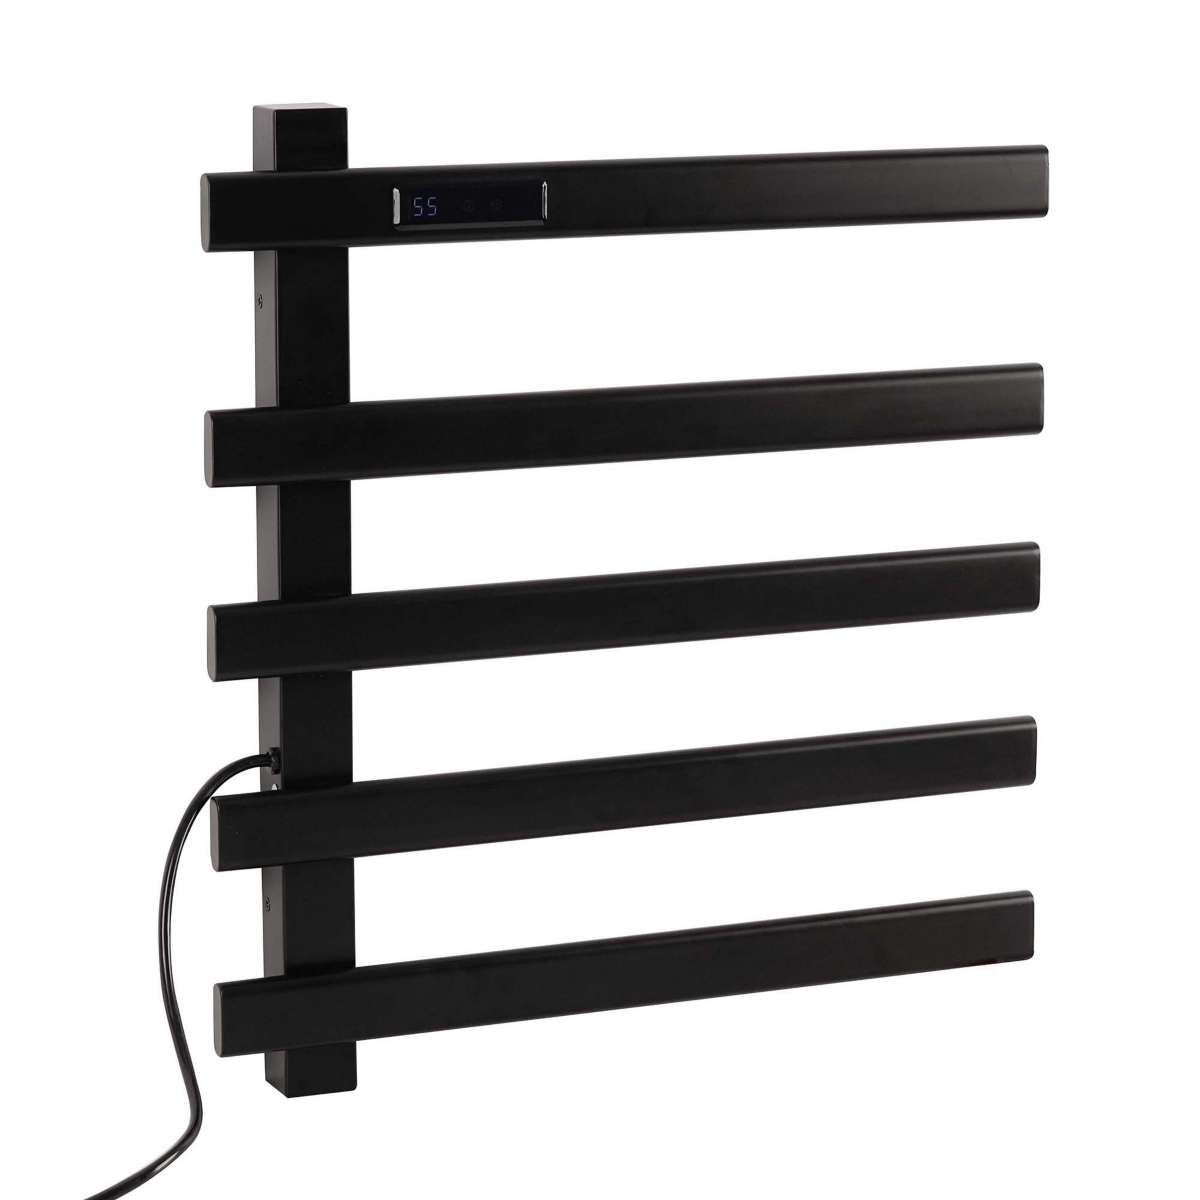 Electric Heated Towel Rack Wall Mounted Drying Rack, Stainless Steel Towel Warmer 5 Bars - Black